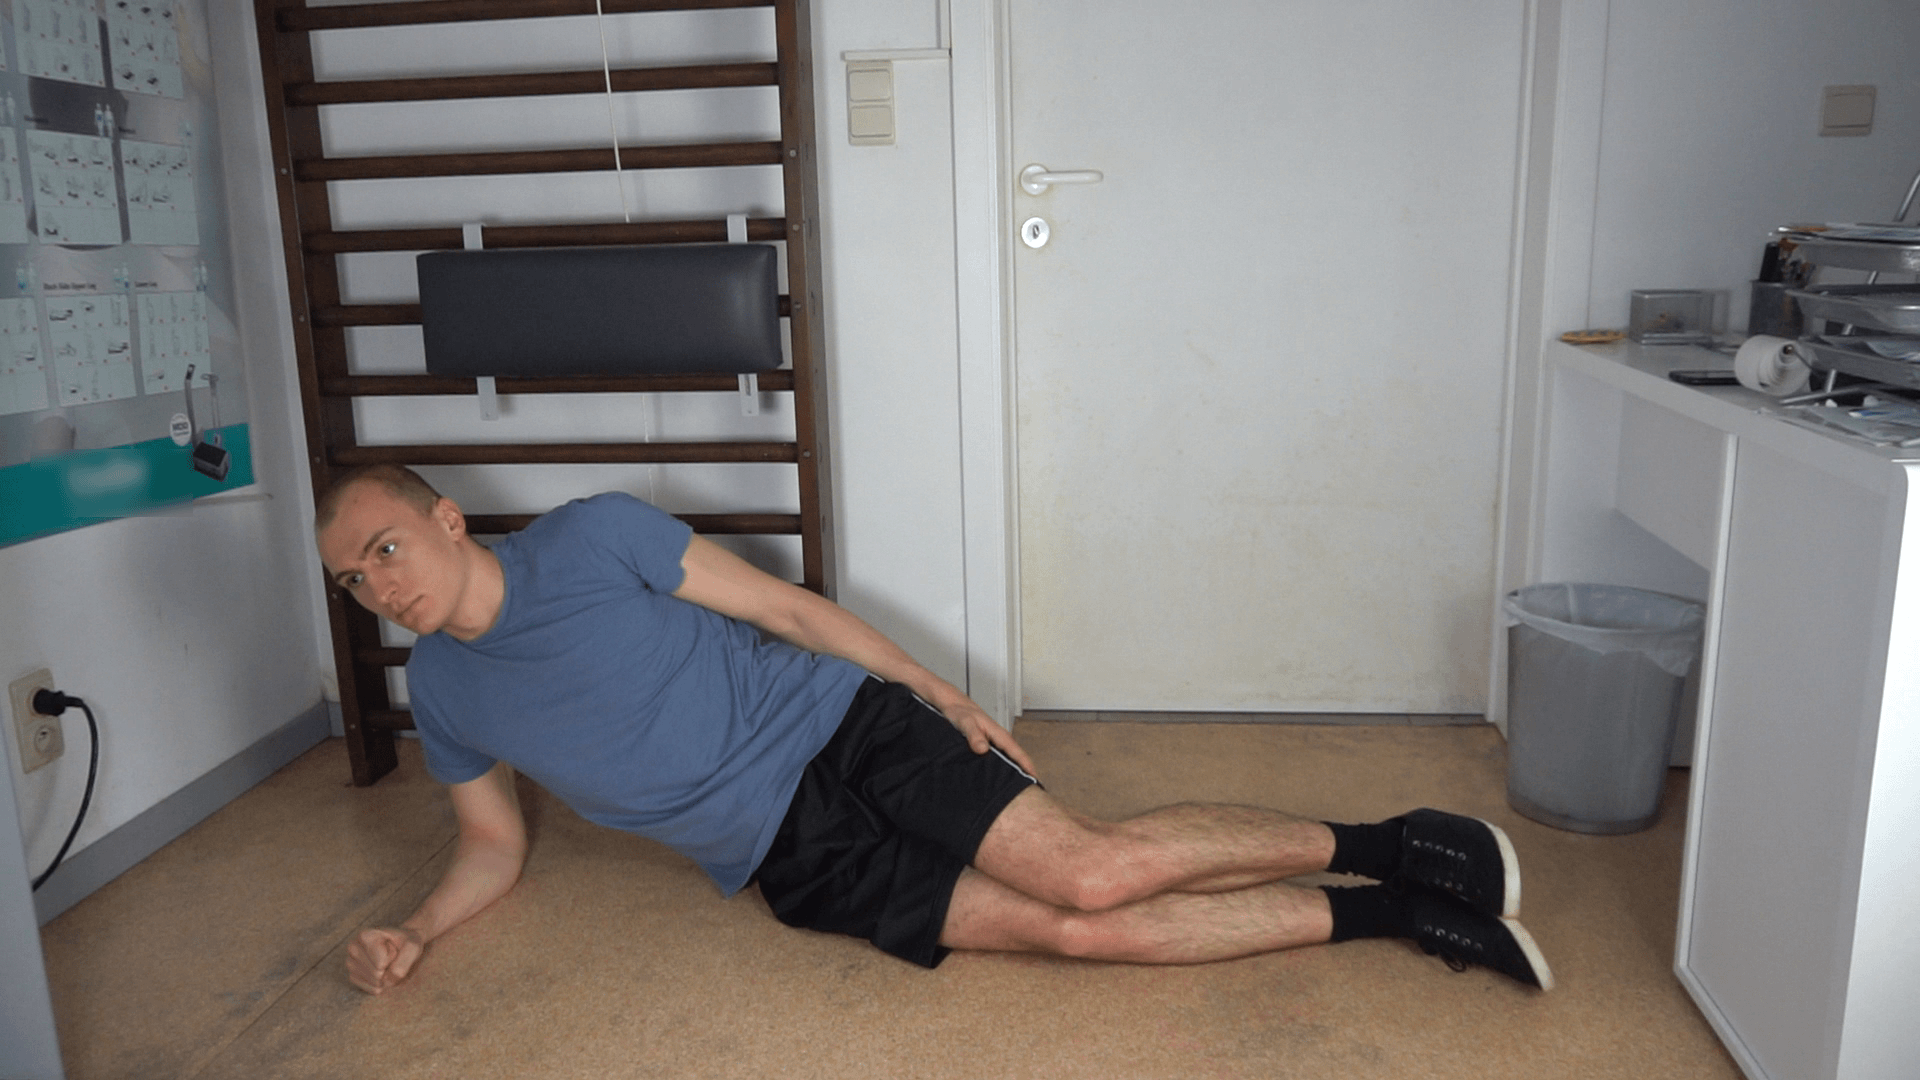 How to do a single-leg side plank